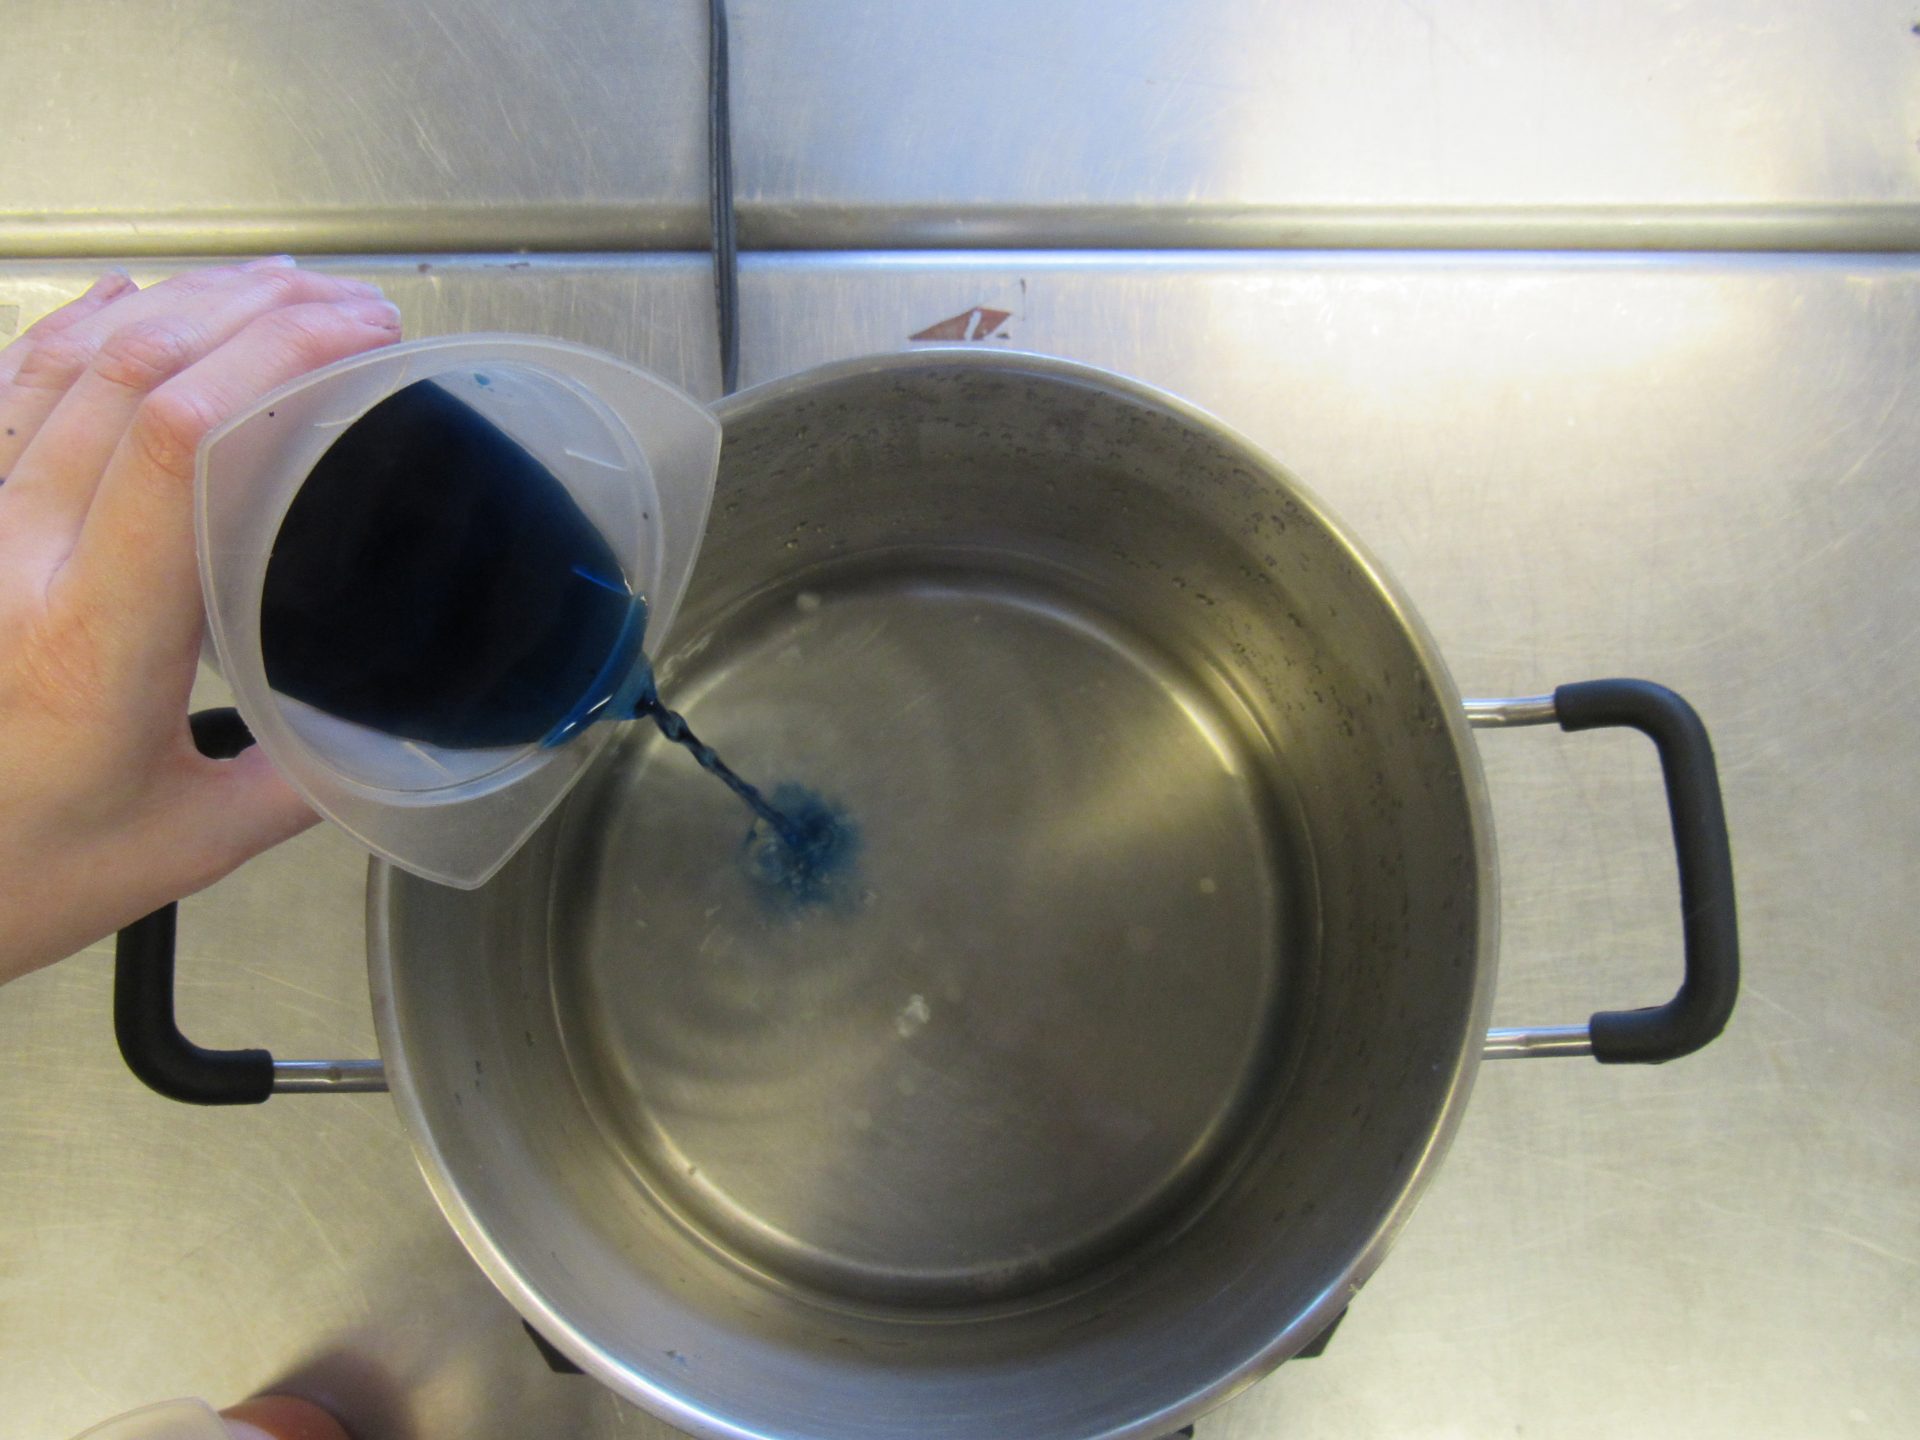 a hand pouring a beaker of bright blue liquid into a pot